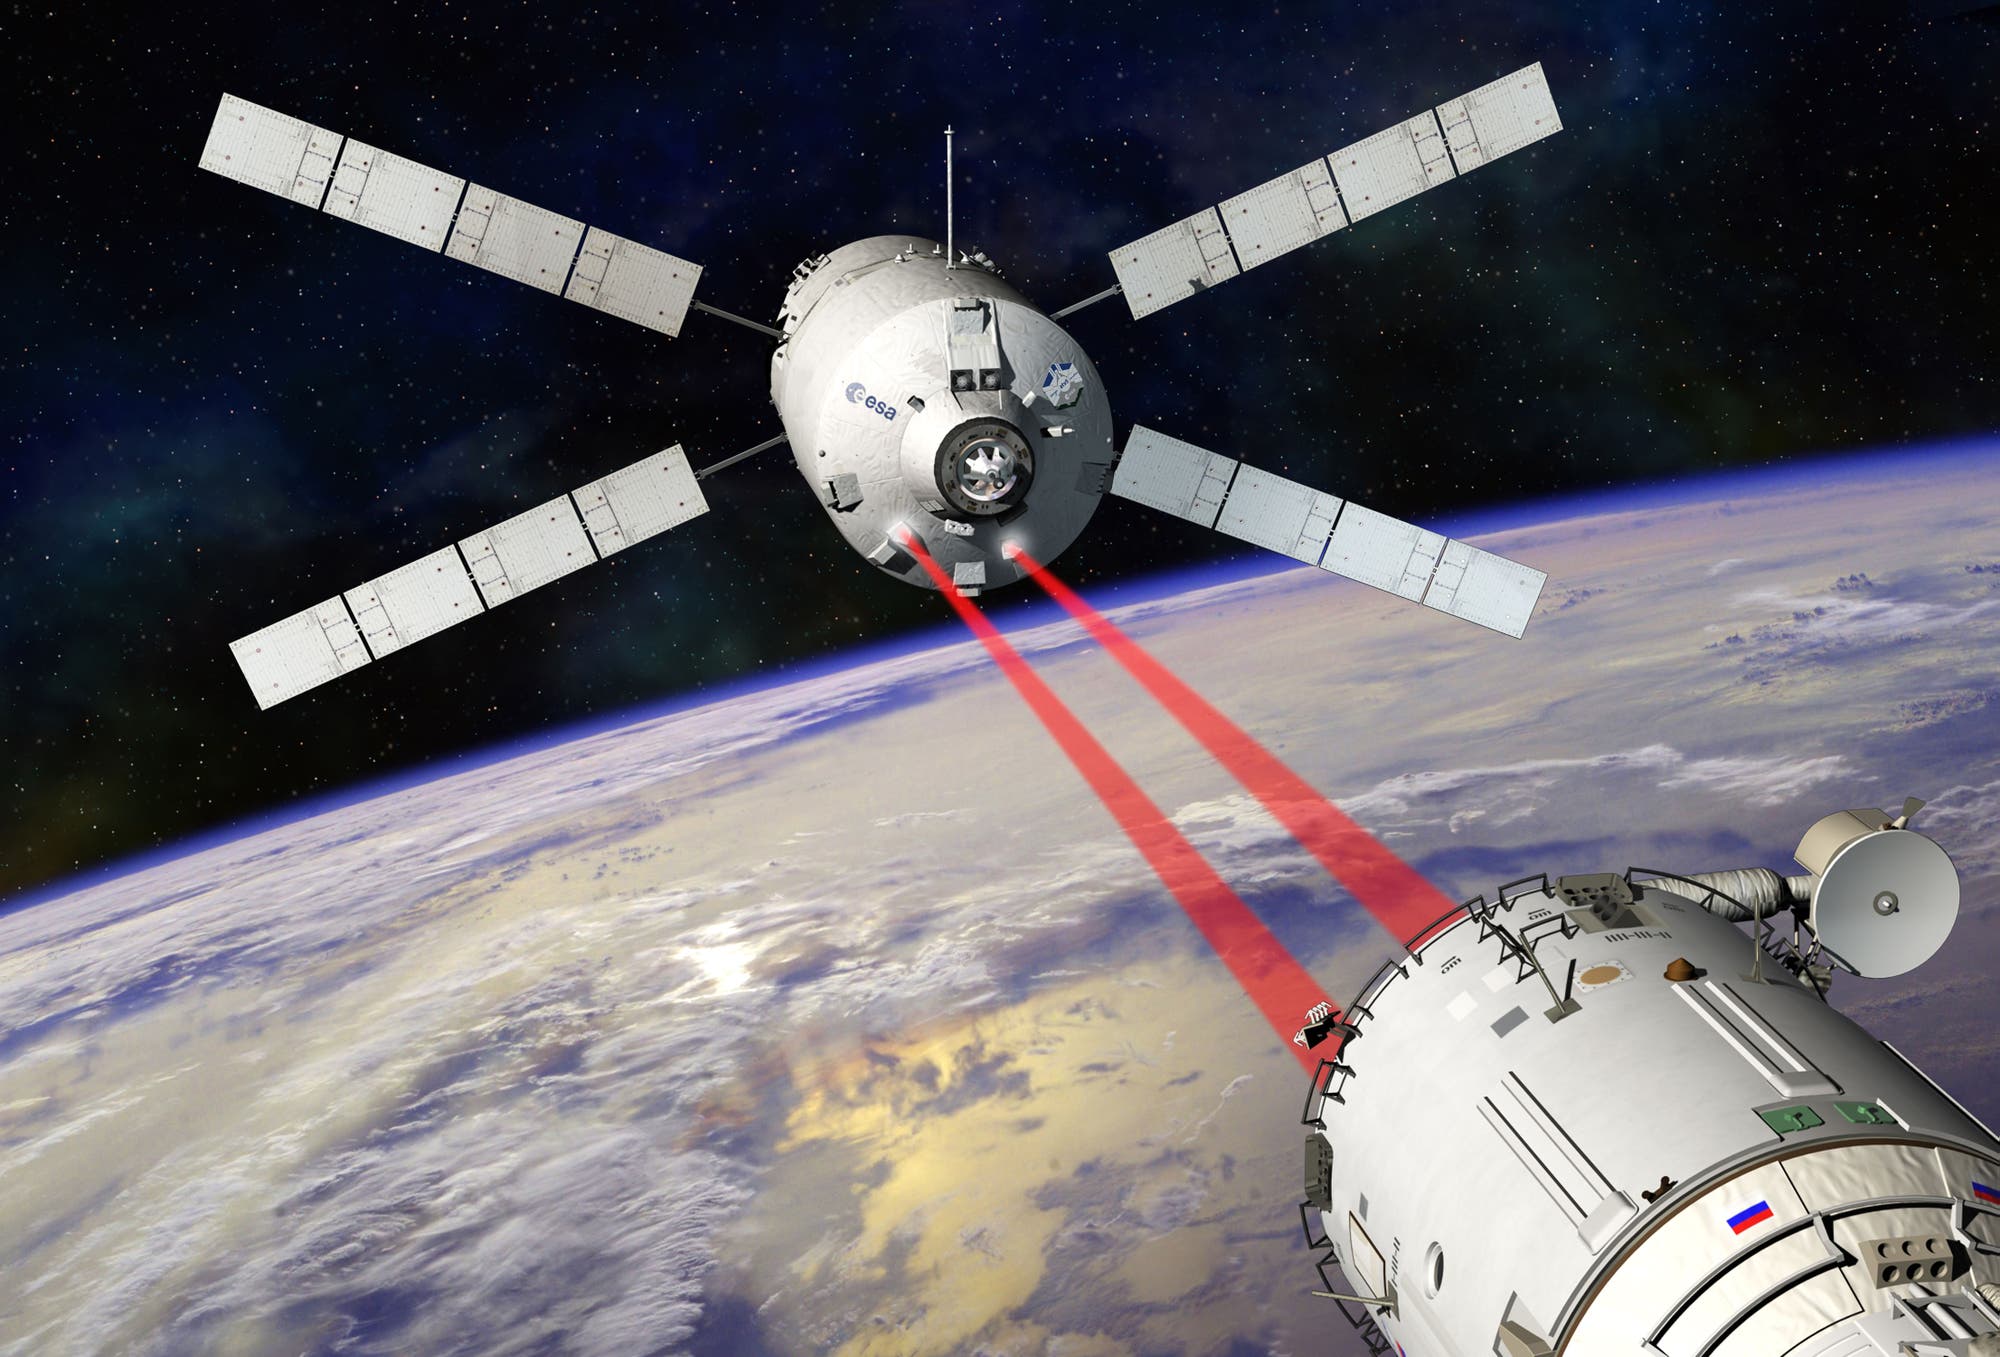 "Johannes Kepler" nähert sich der Internationalen Raumstation ISS